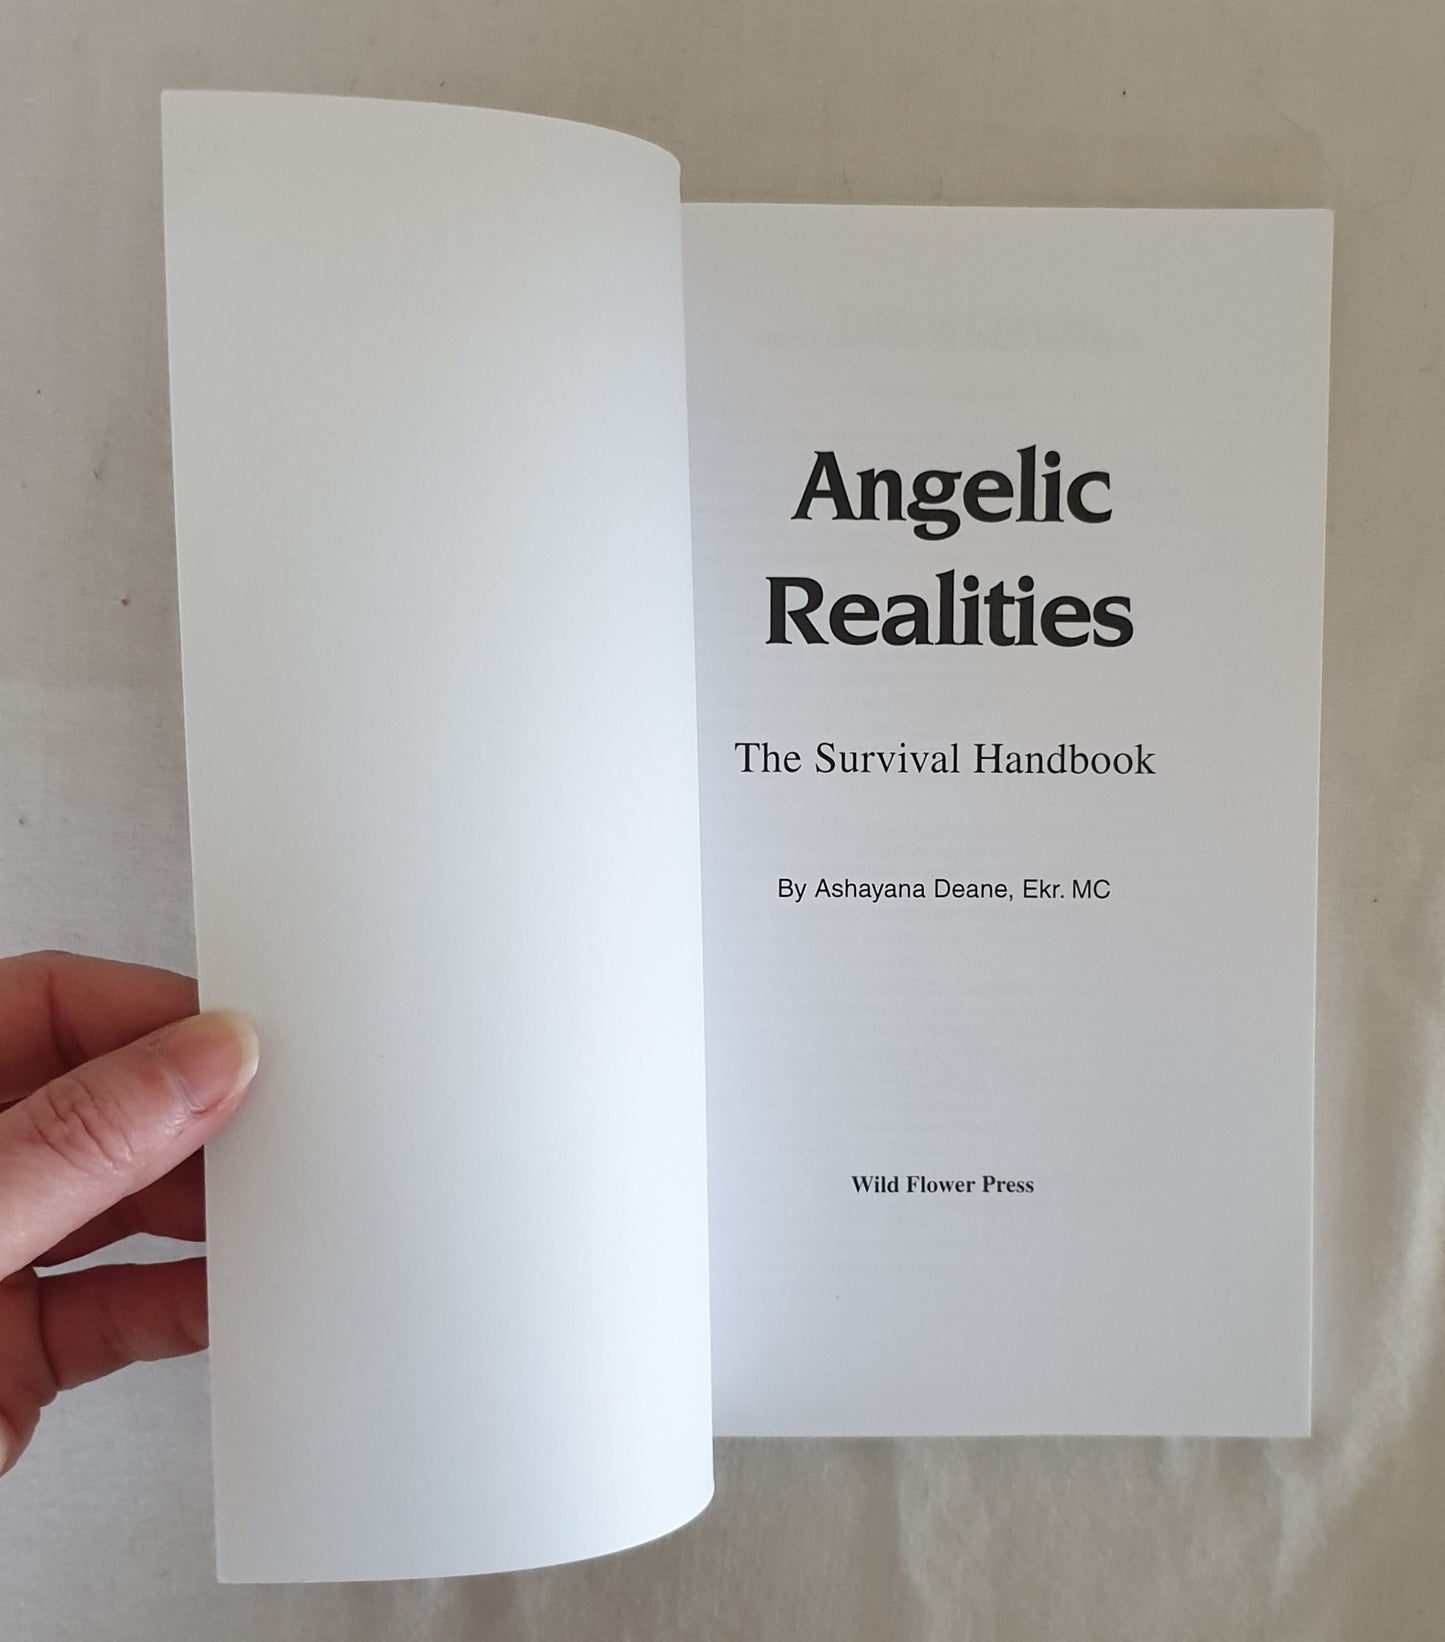 Angelic Realities by Ashayana Deane